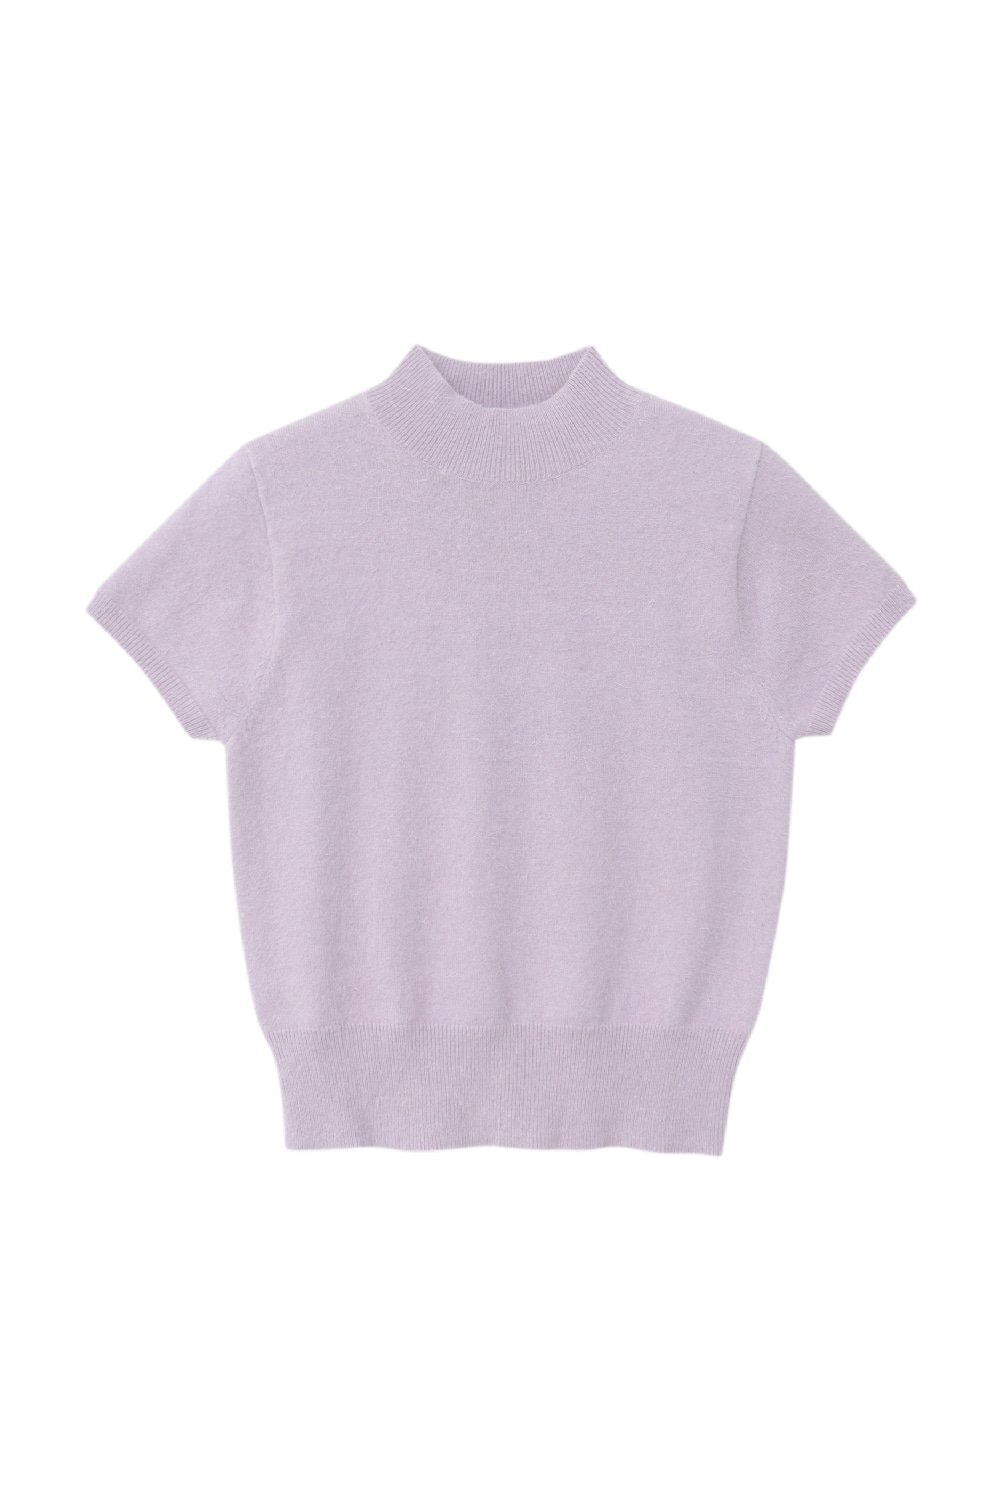 Half Polar Pastel Knit Top (Purple)